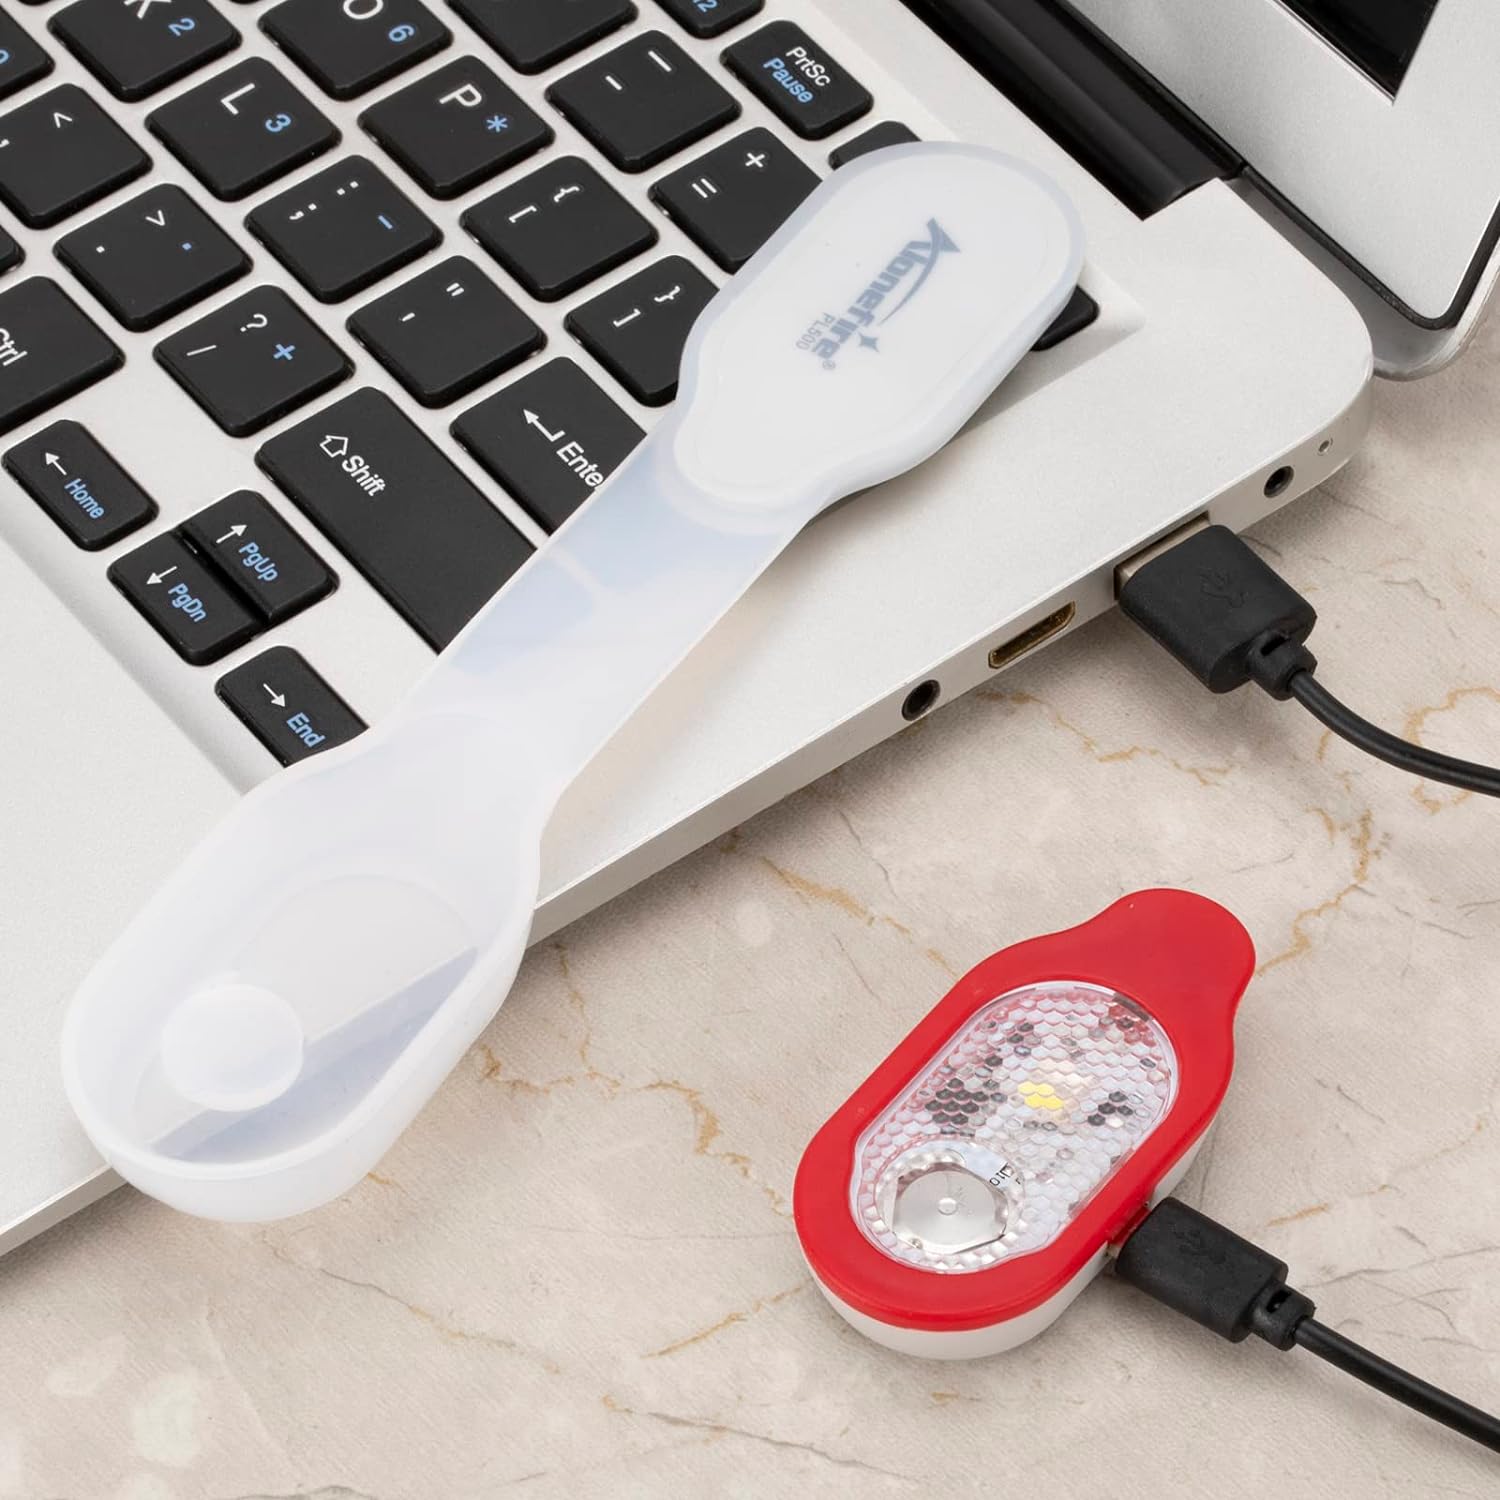 ALONEFIRE PL500 Nursing Night Light Clip on Flashlight USB Rechargeable Magnetic Nursing Light 3 Modes for Nurses Night Shift Nurse Essentials, Shirt, Badge with Keychain Light,Built-in Battery(Red)